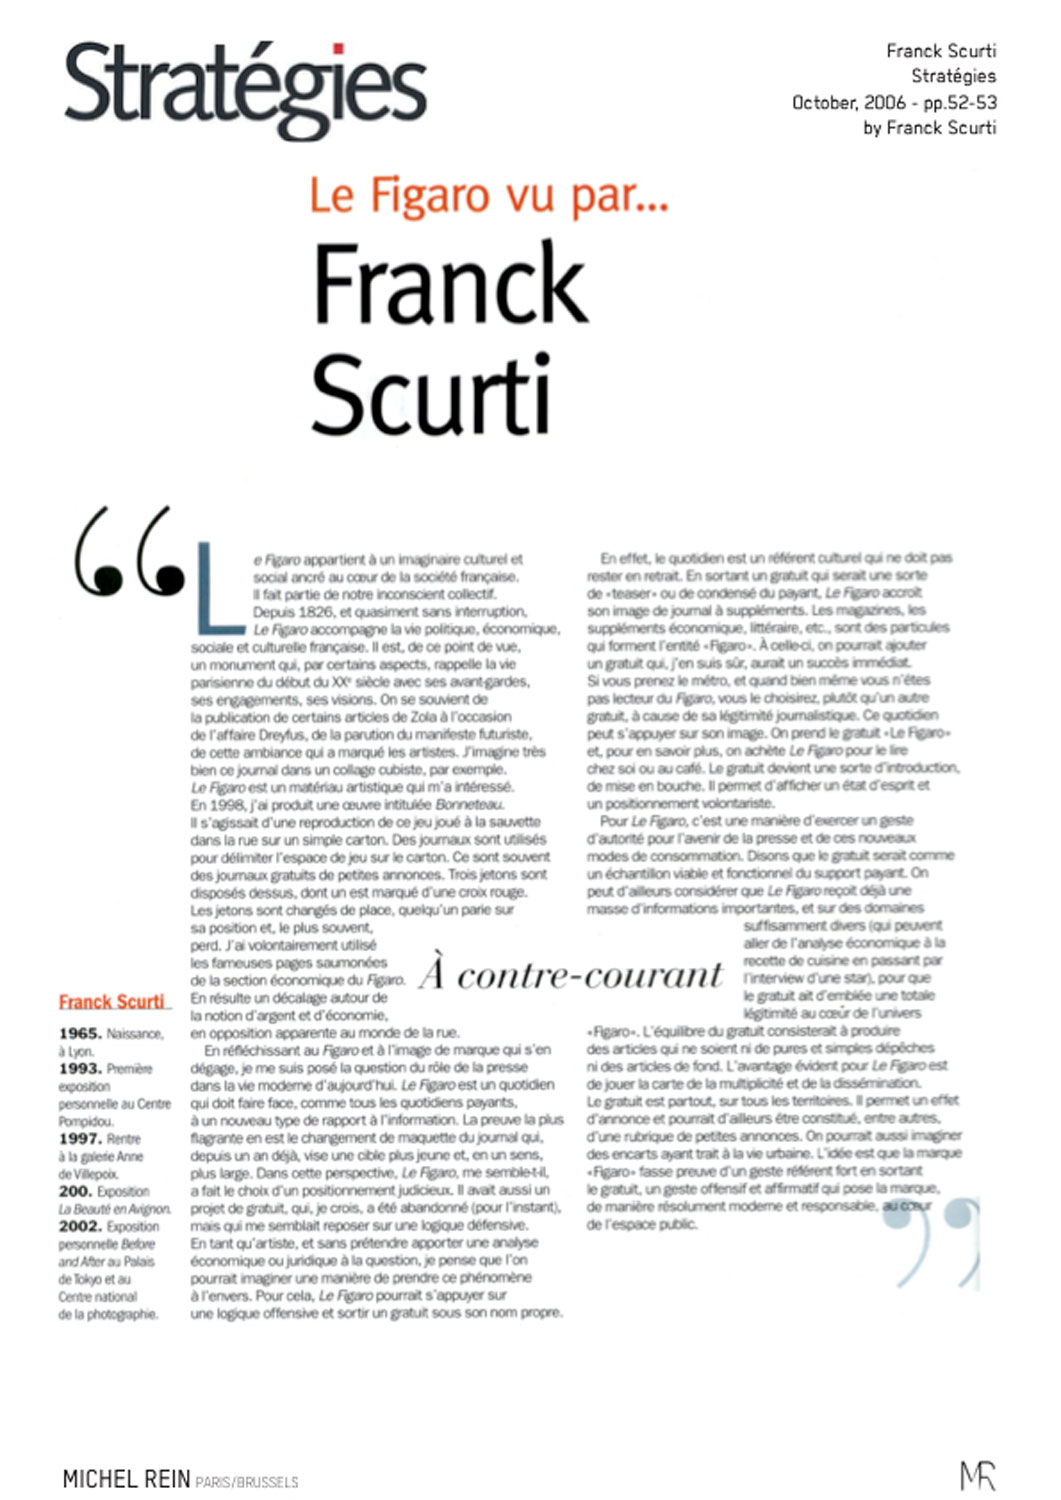 Le Figaro vu par Franck Scurti - Stratgies, Le Figaro